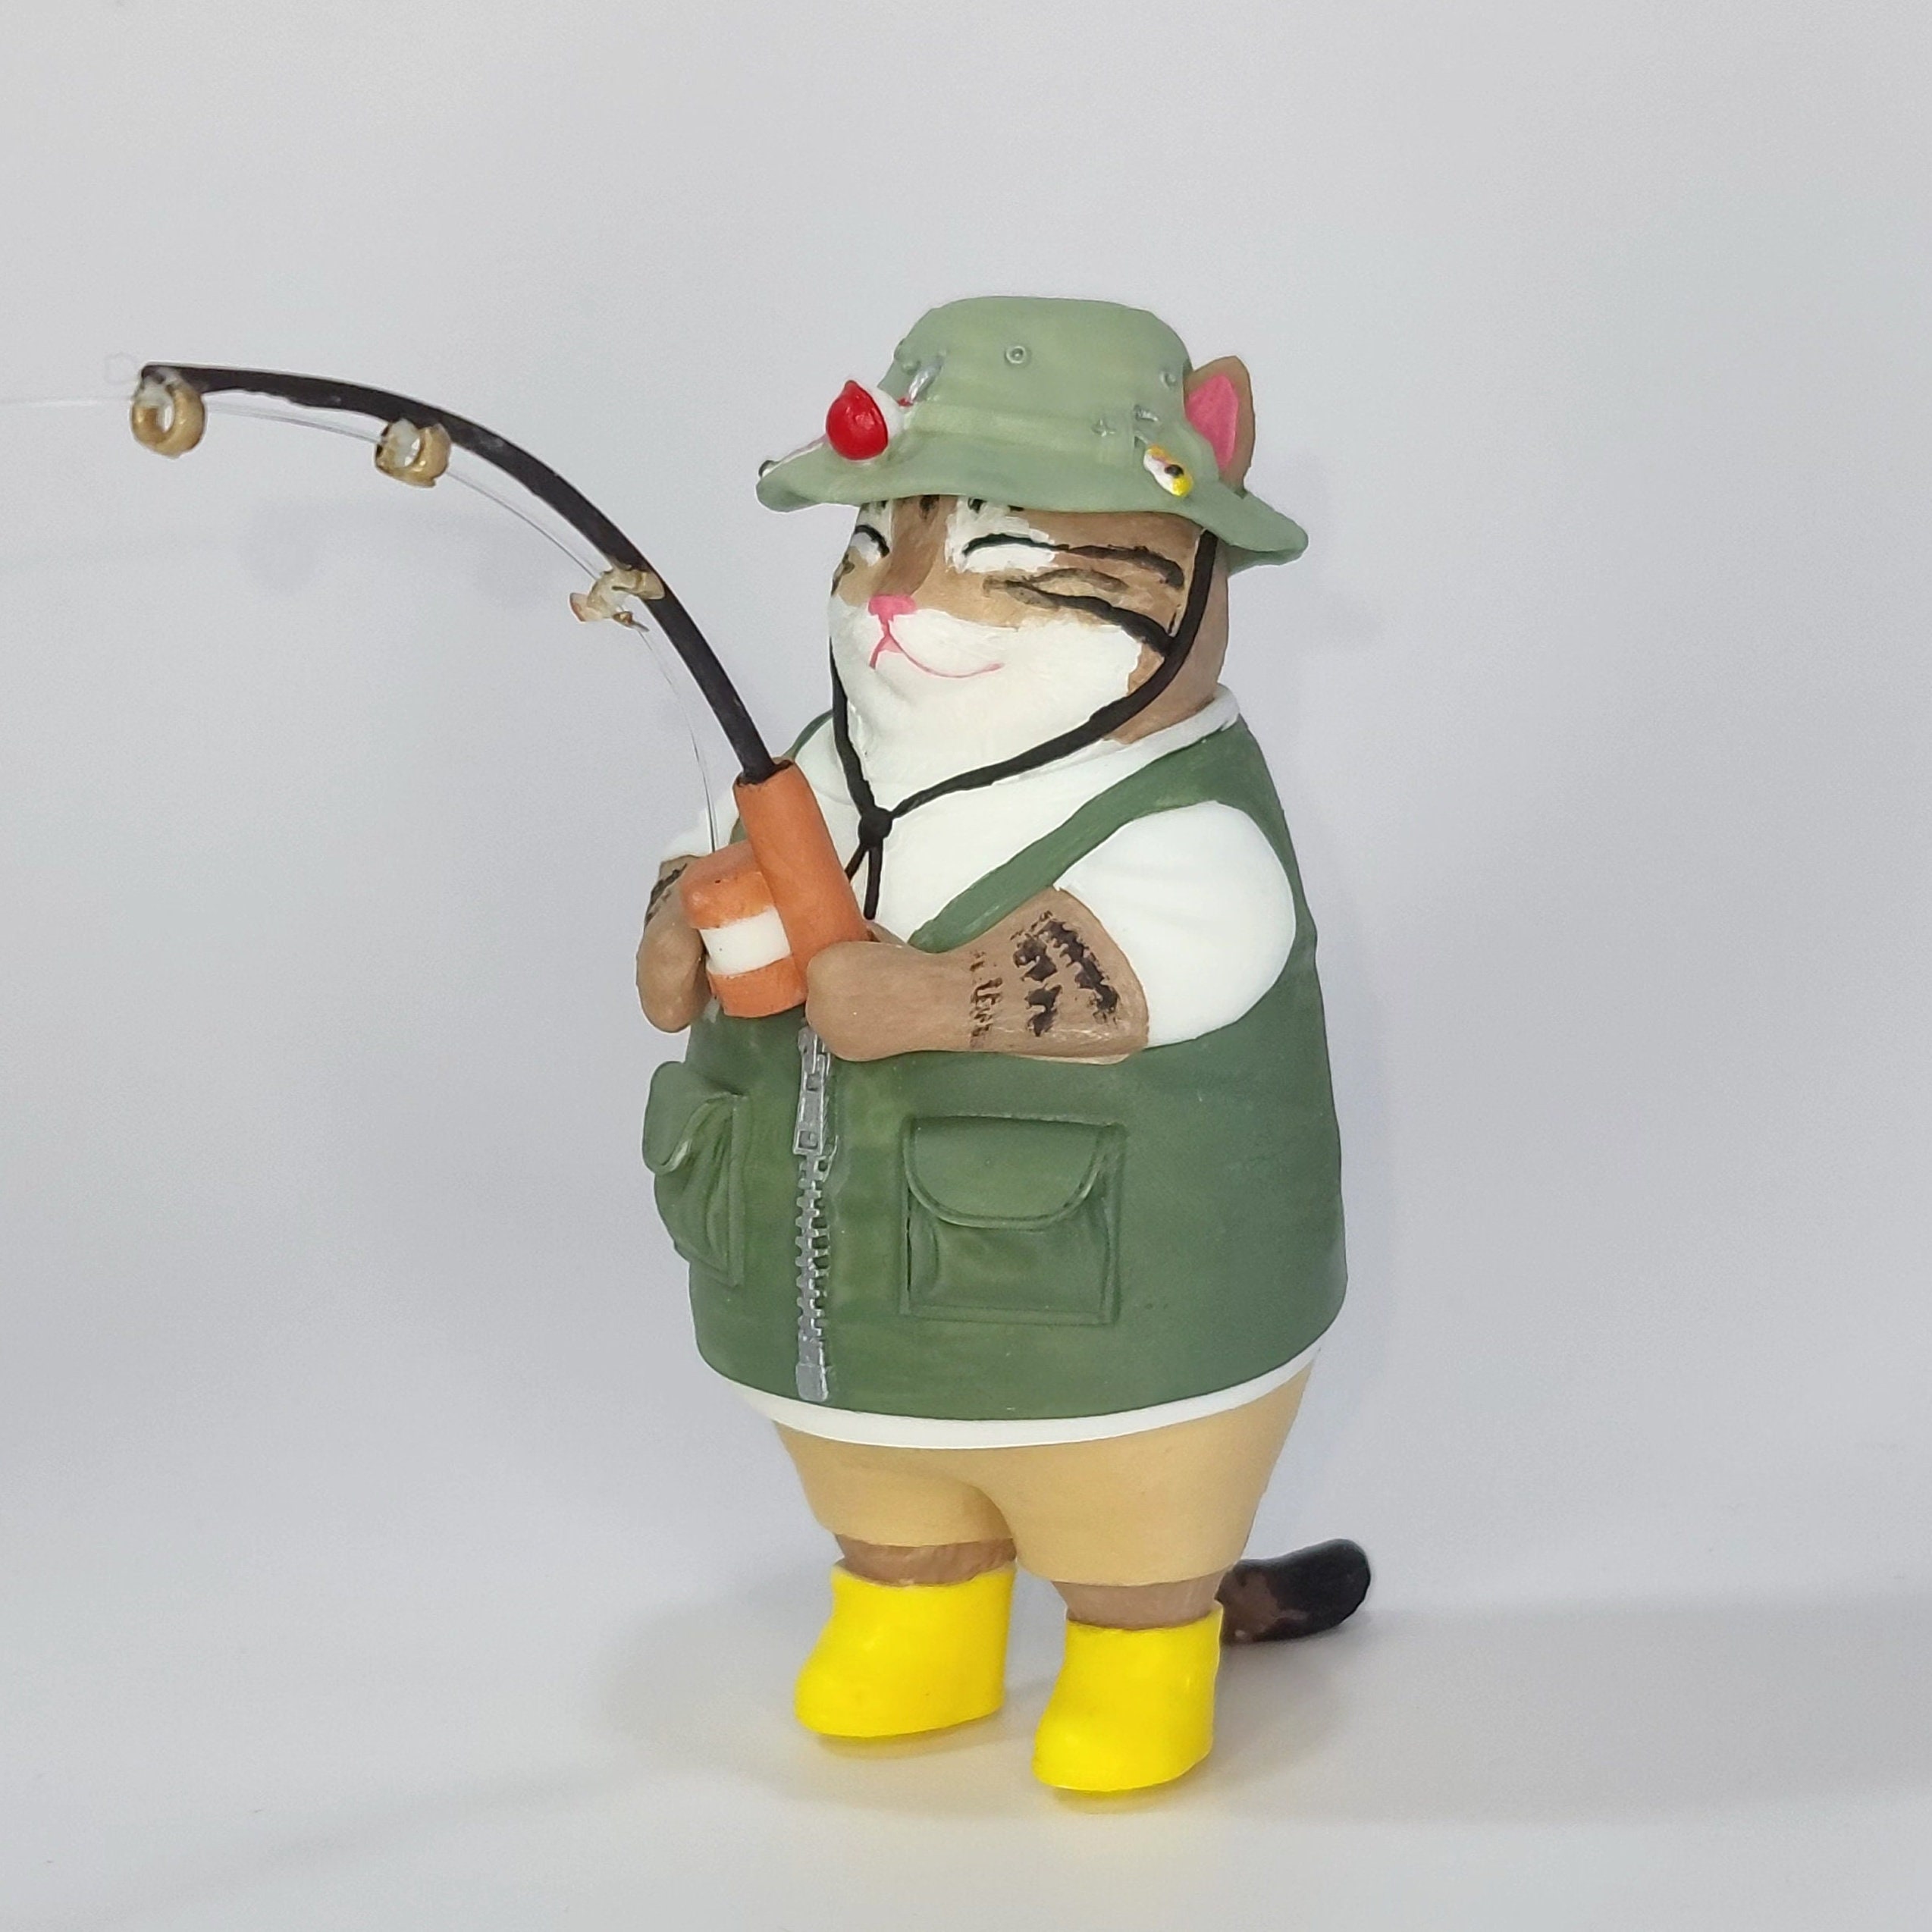 Fishing Cat Figurine 